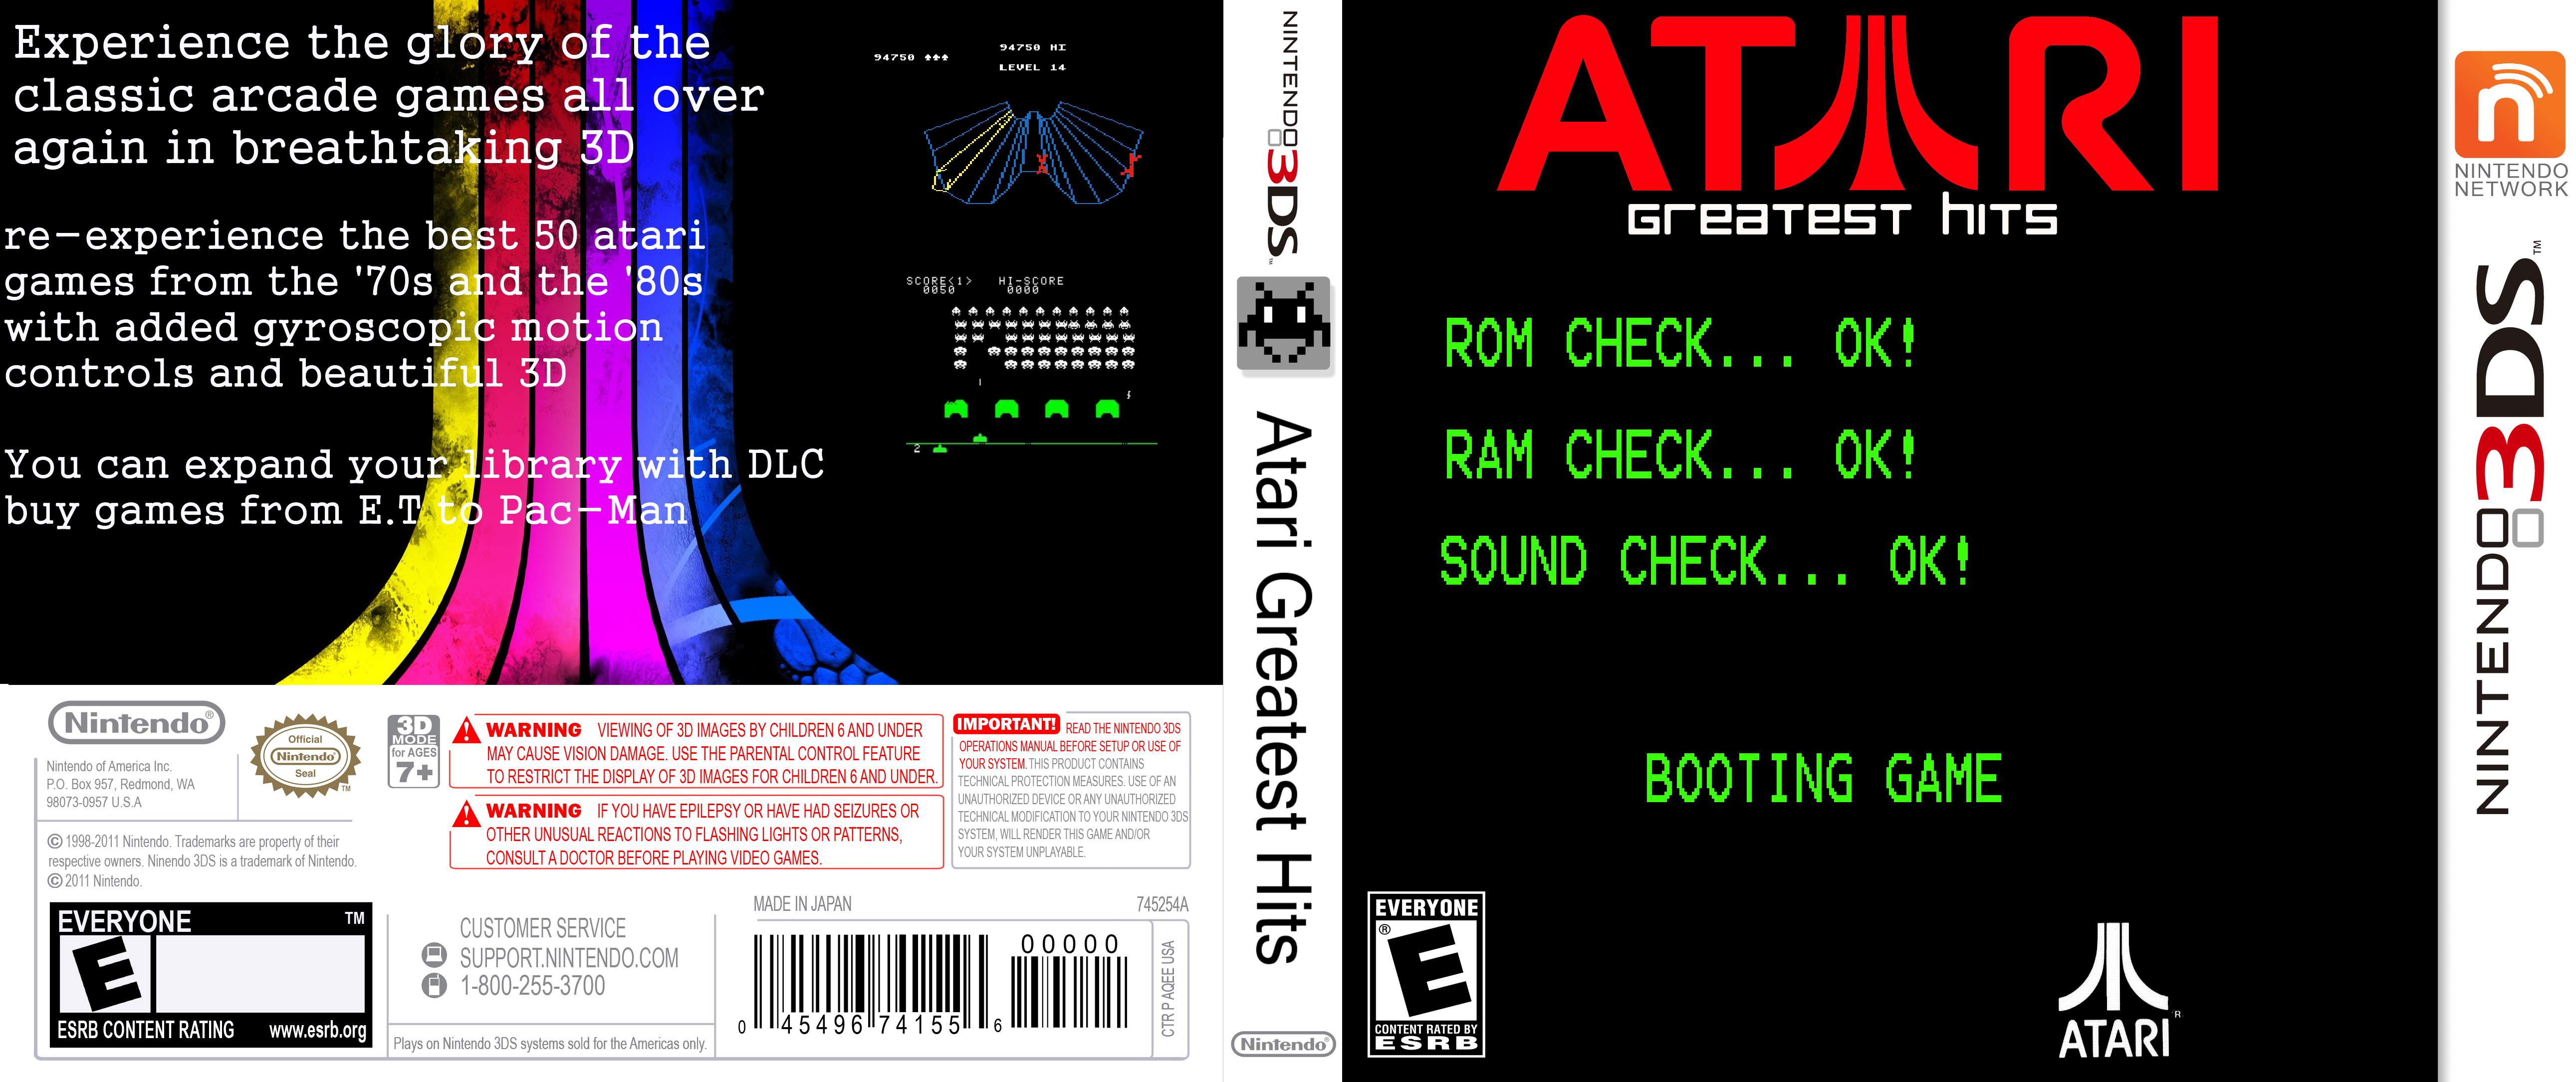 Atari: Greatest Hits box cover